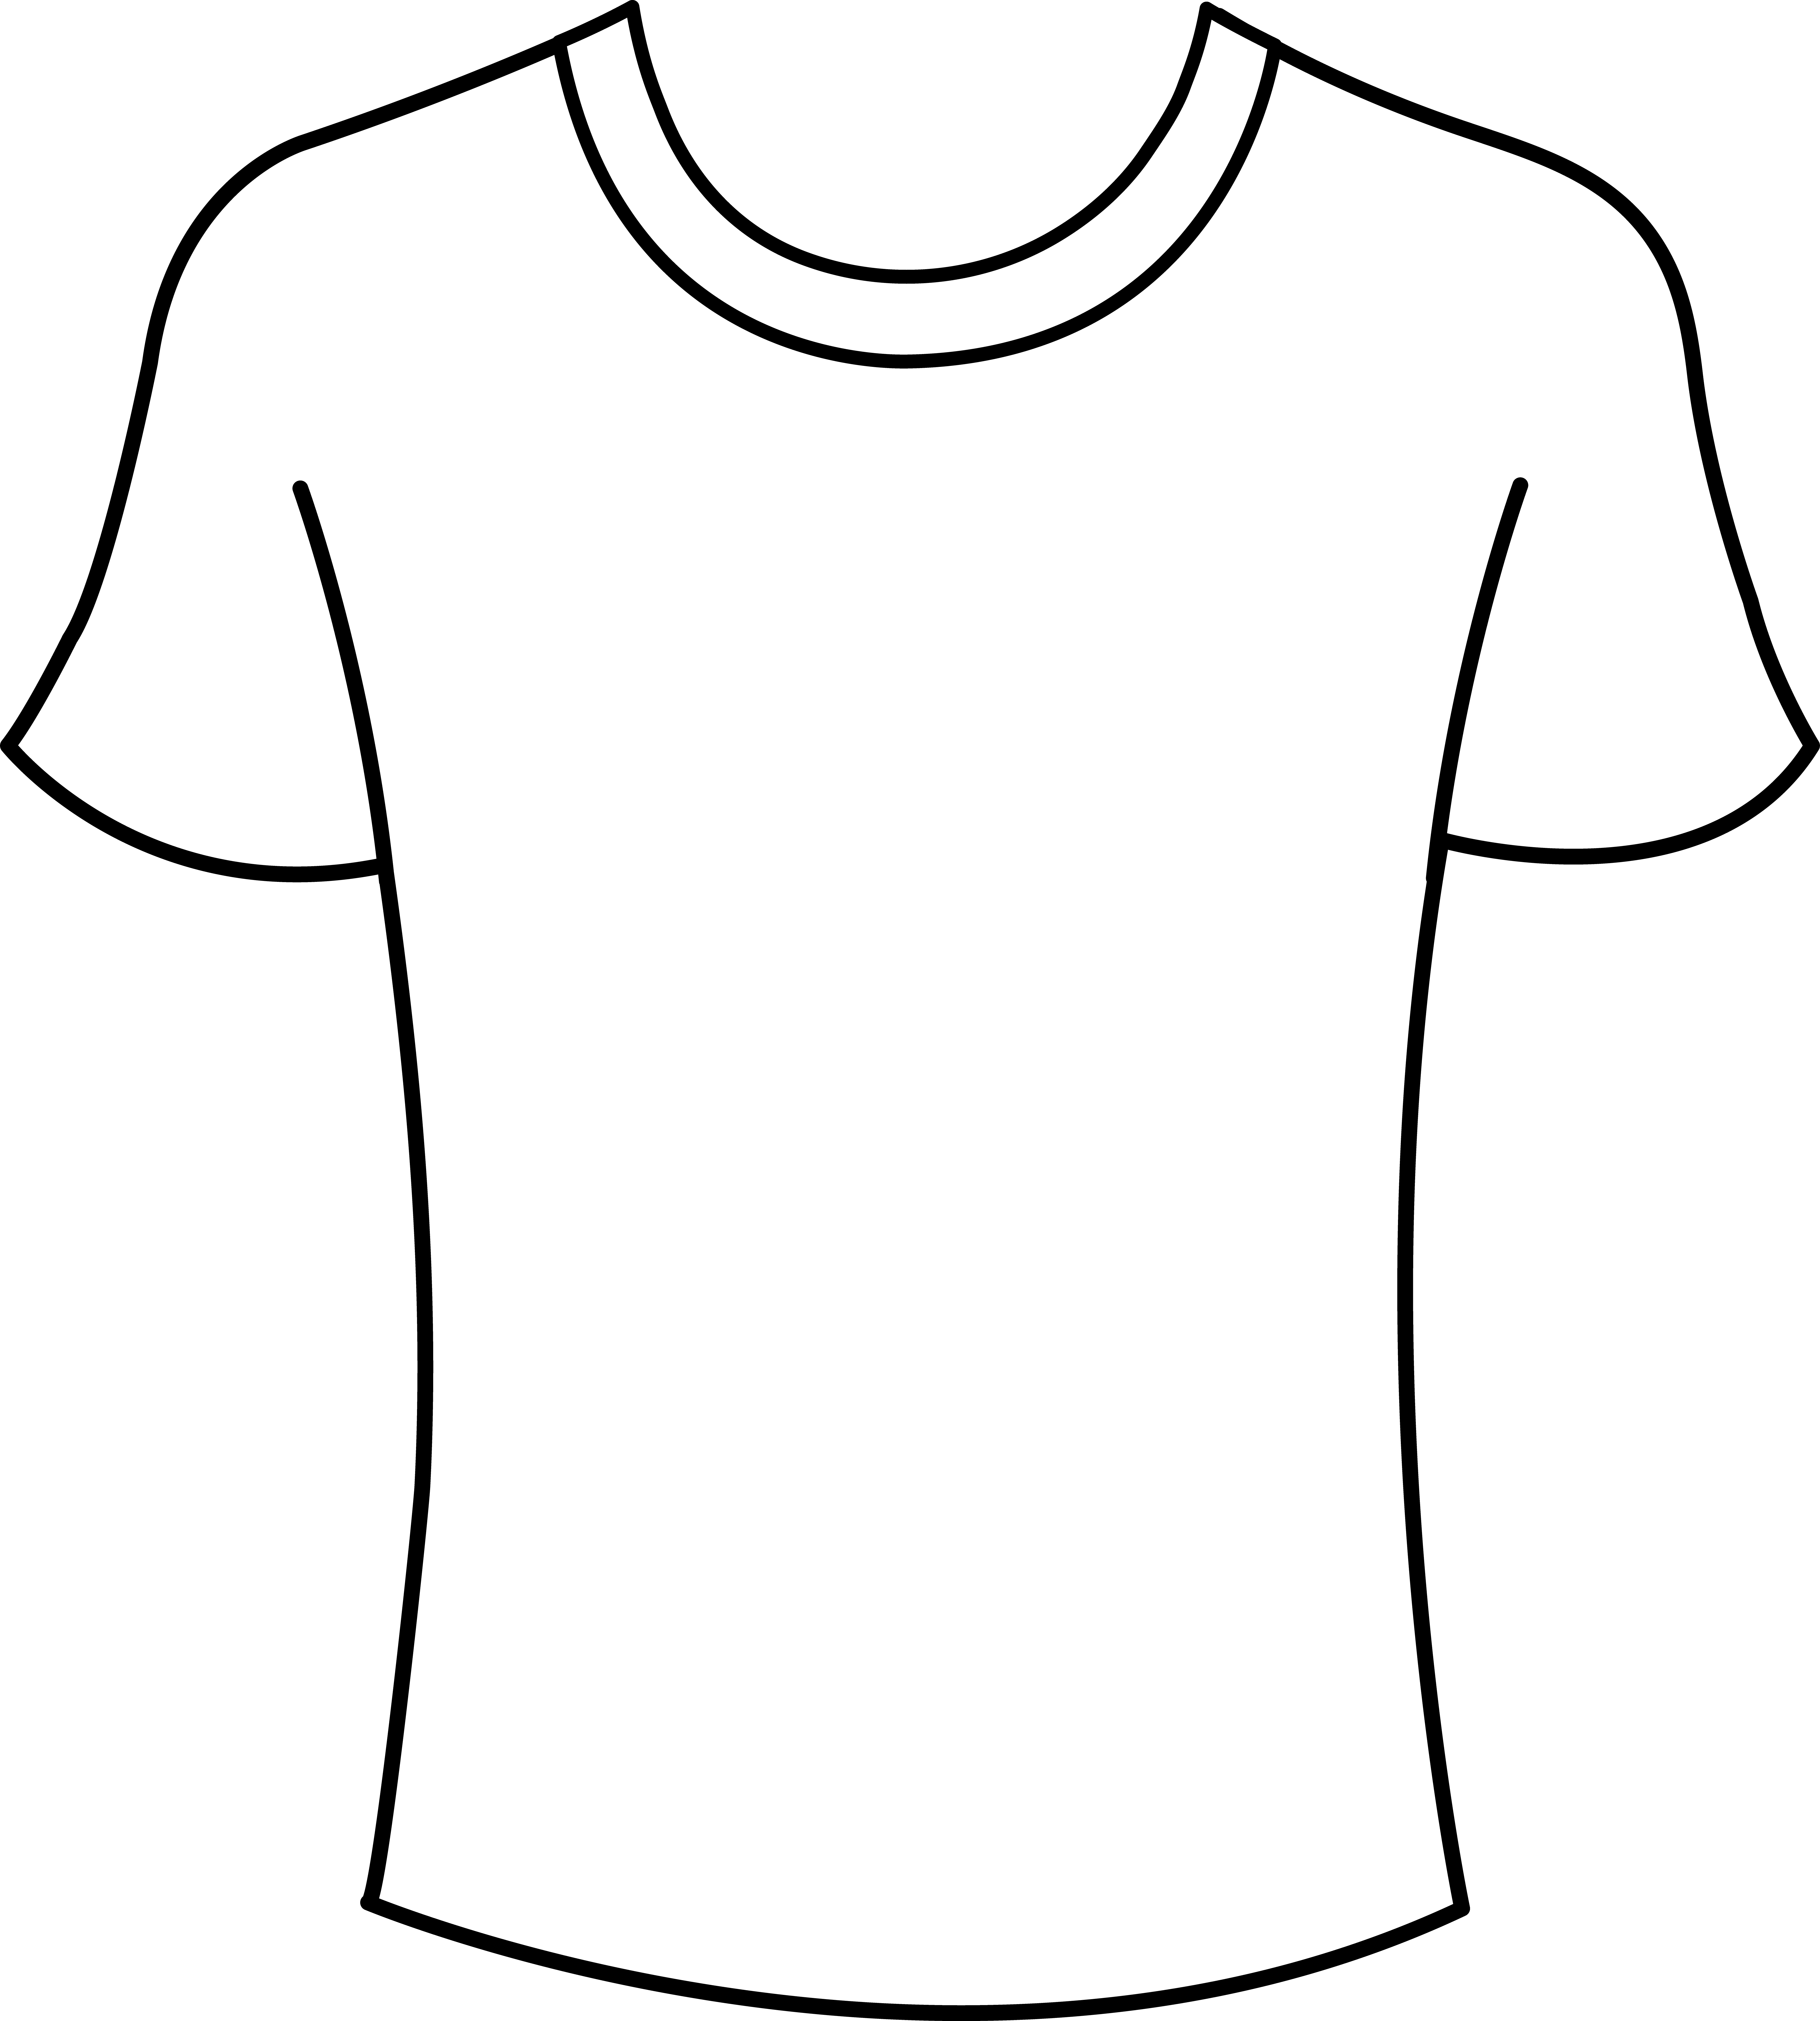 T Shirt Shirt Outline Hd Image Clipart